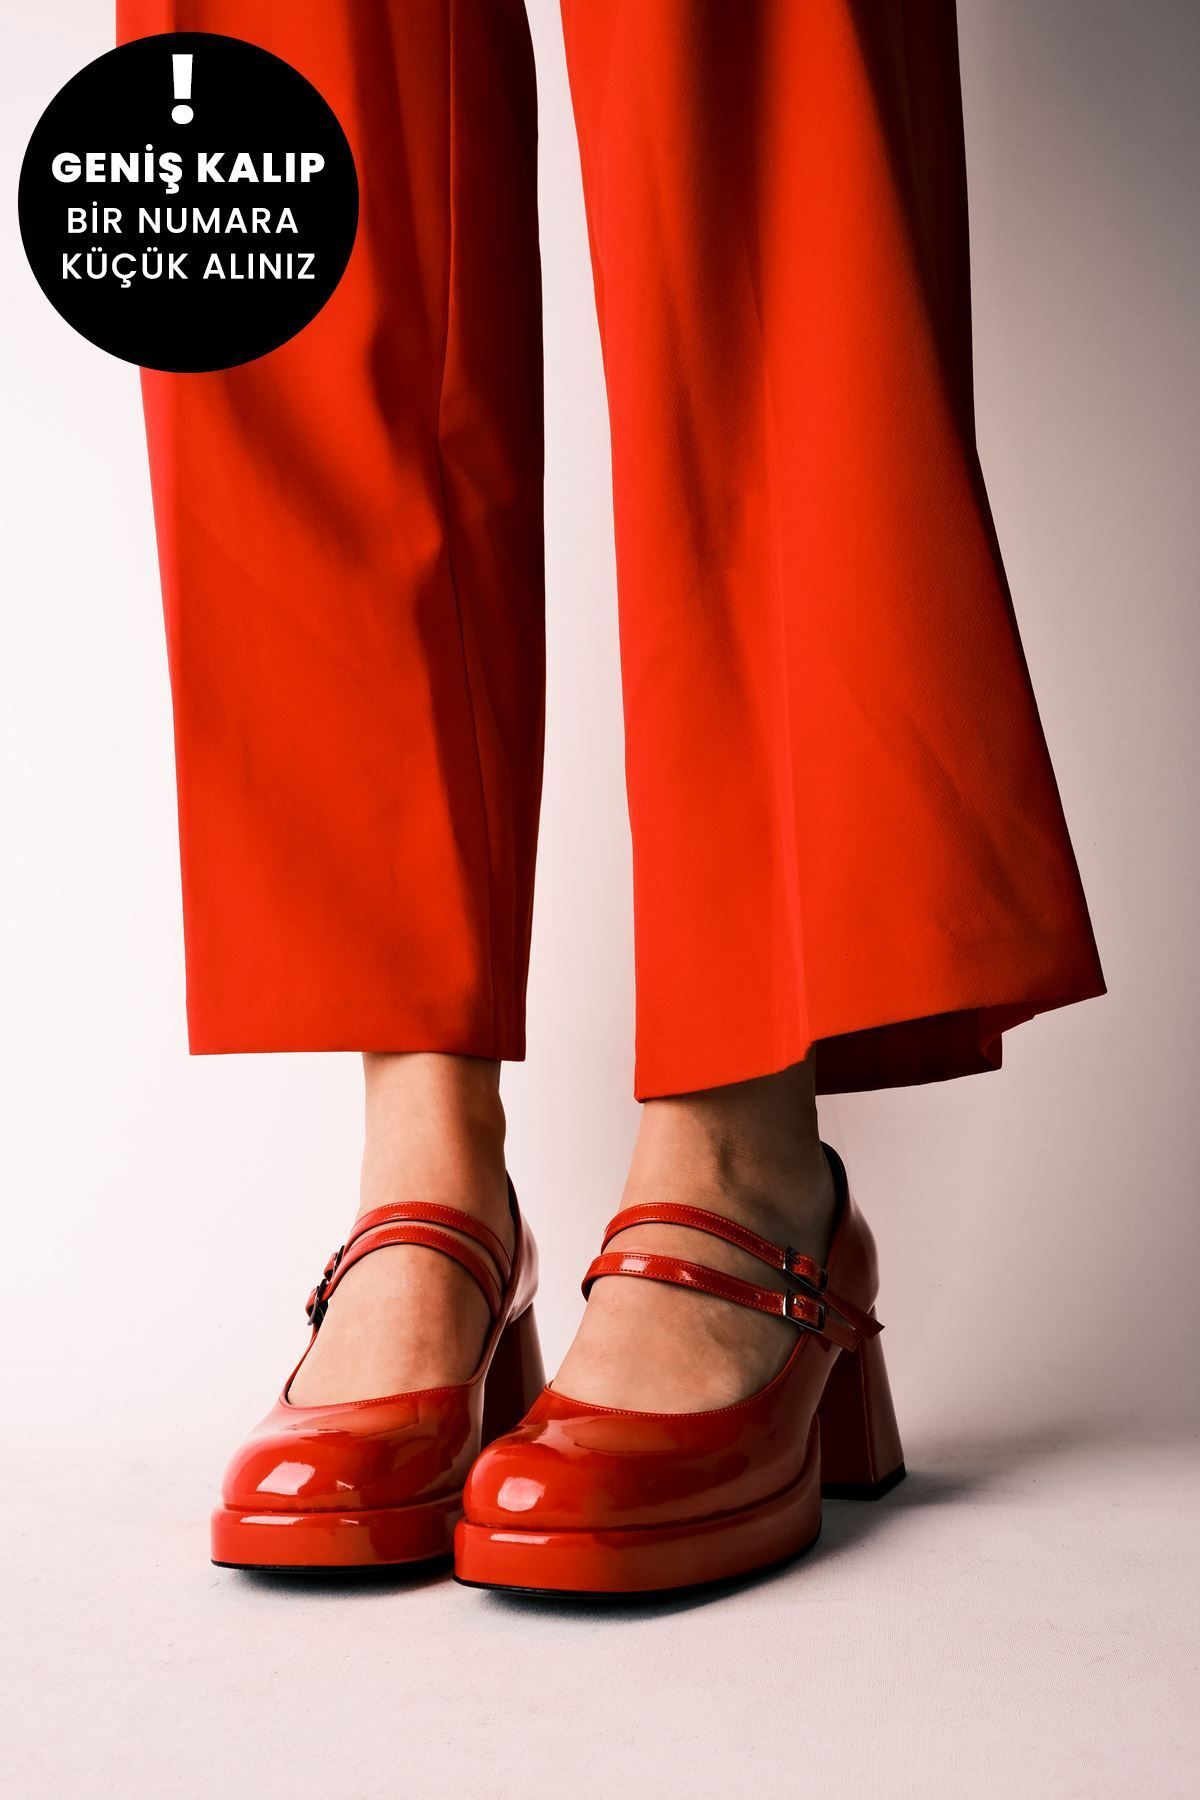 LAL SHOES & BAGS Cool Kadın İki Bantlı Vintage Topuklu Ayakkabı-R.KIRMIZI